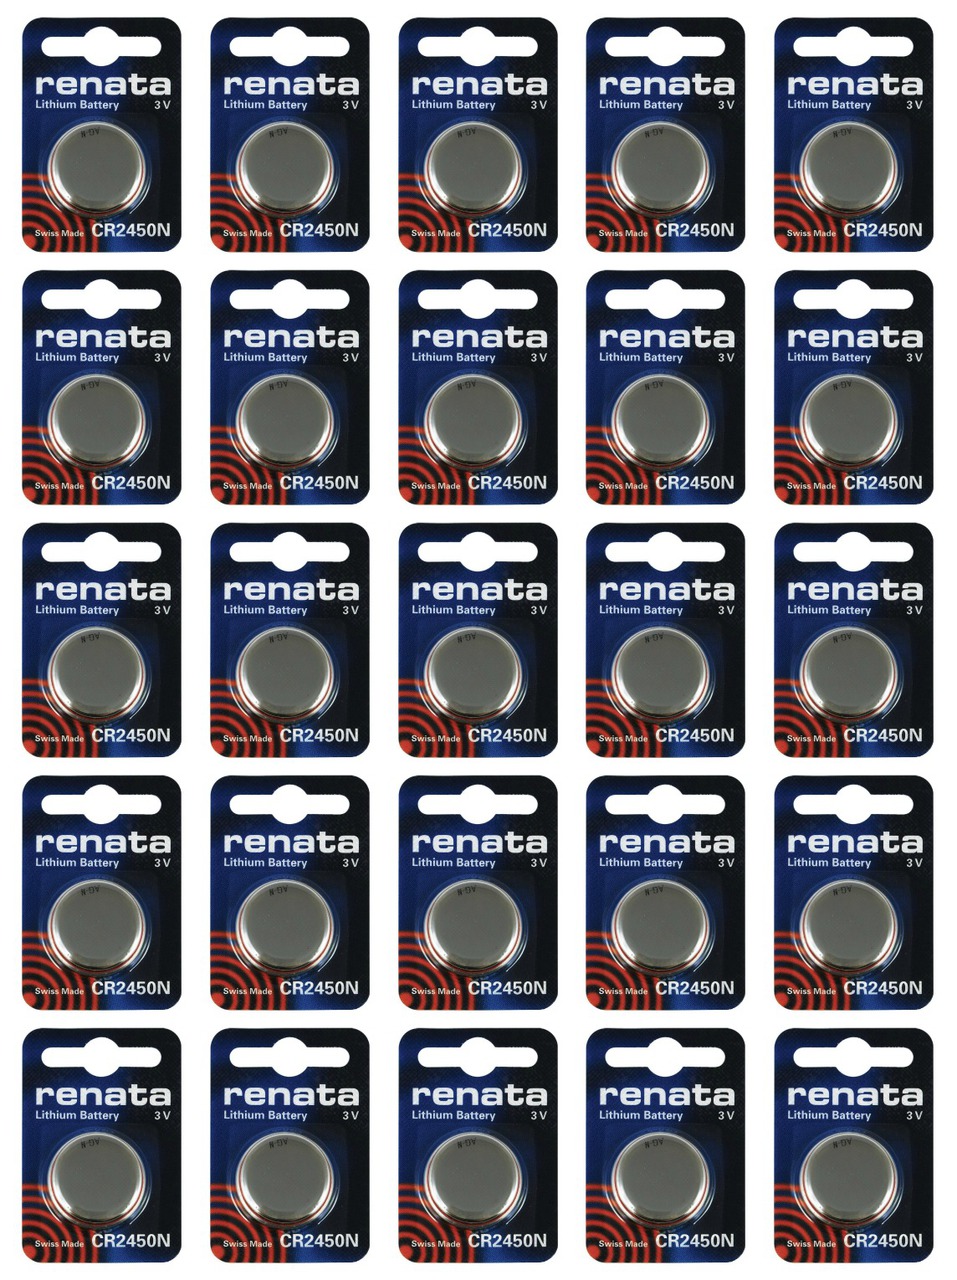 Renata CR2450N 3V Lithium Coin Battery 25 Pack + FREE SHIPPING!